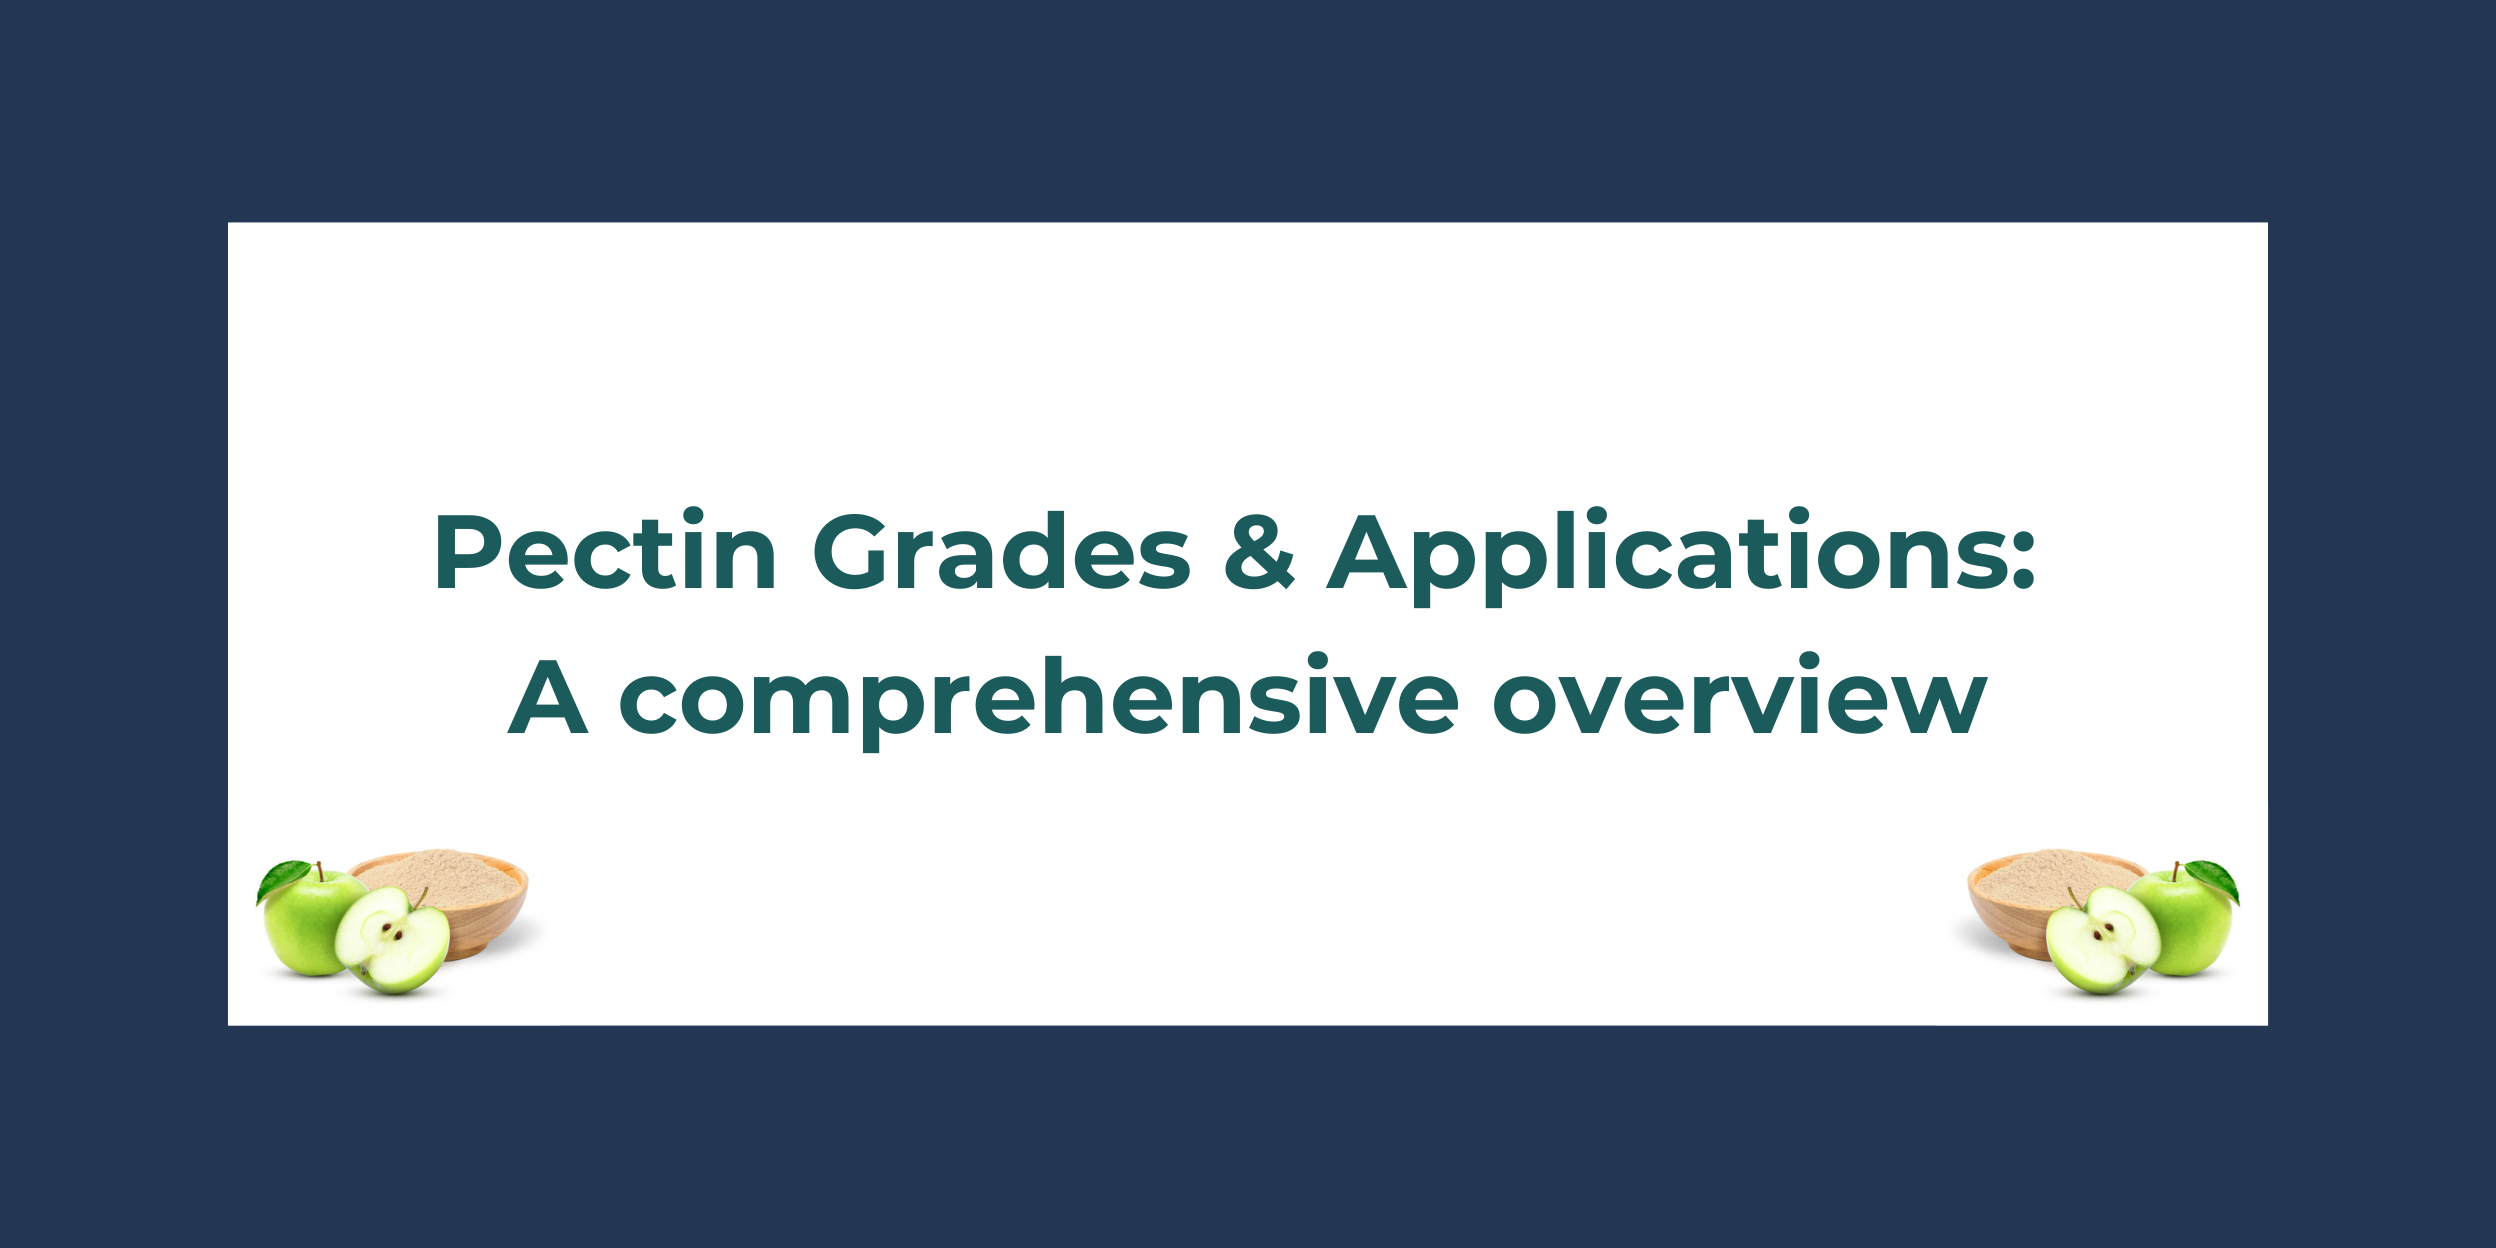 Pectin Grades & Applications: A comprehensive overview